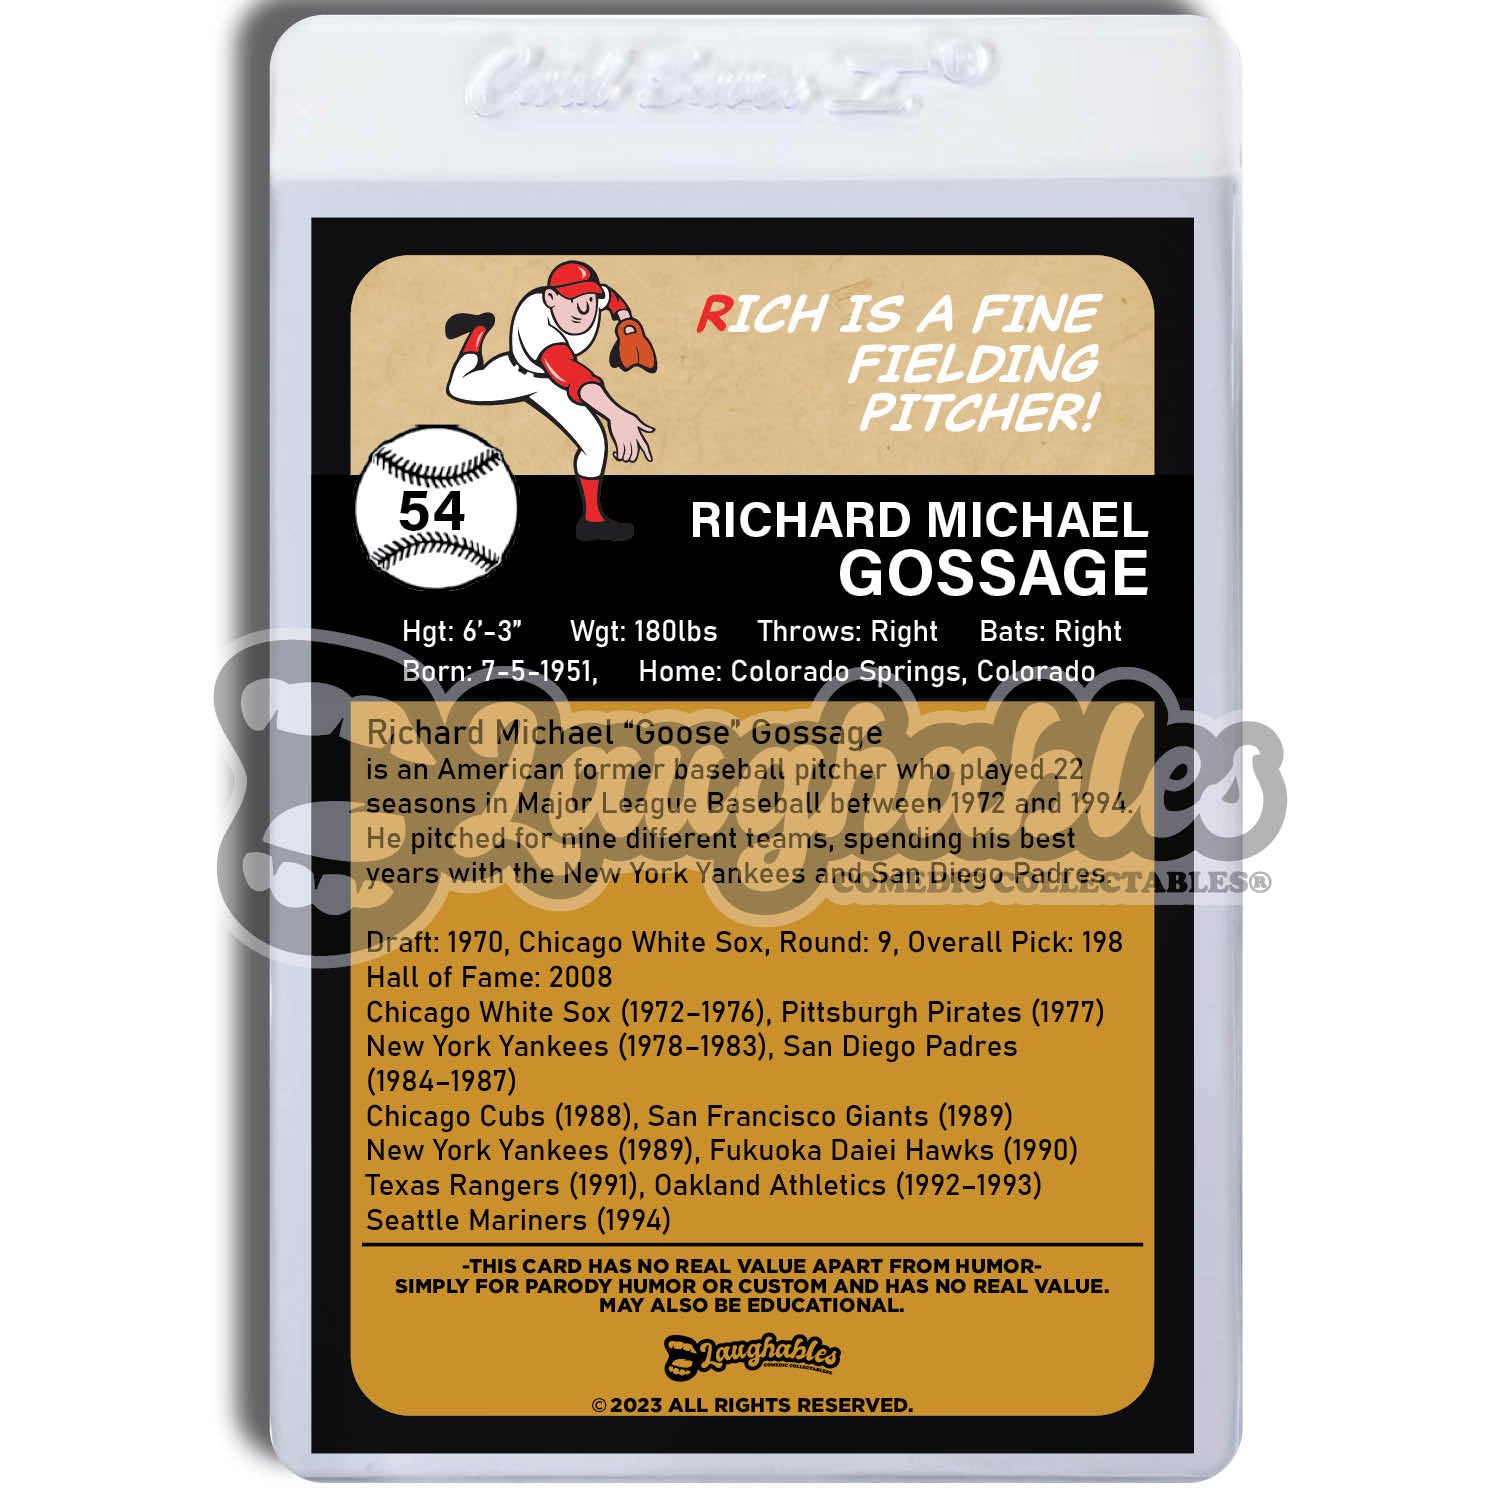 Rich Gossage | Chicago White Sox | Custom Art Trading Card Novelty